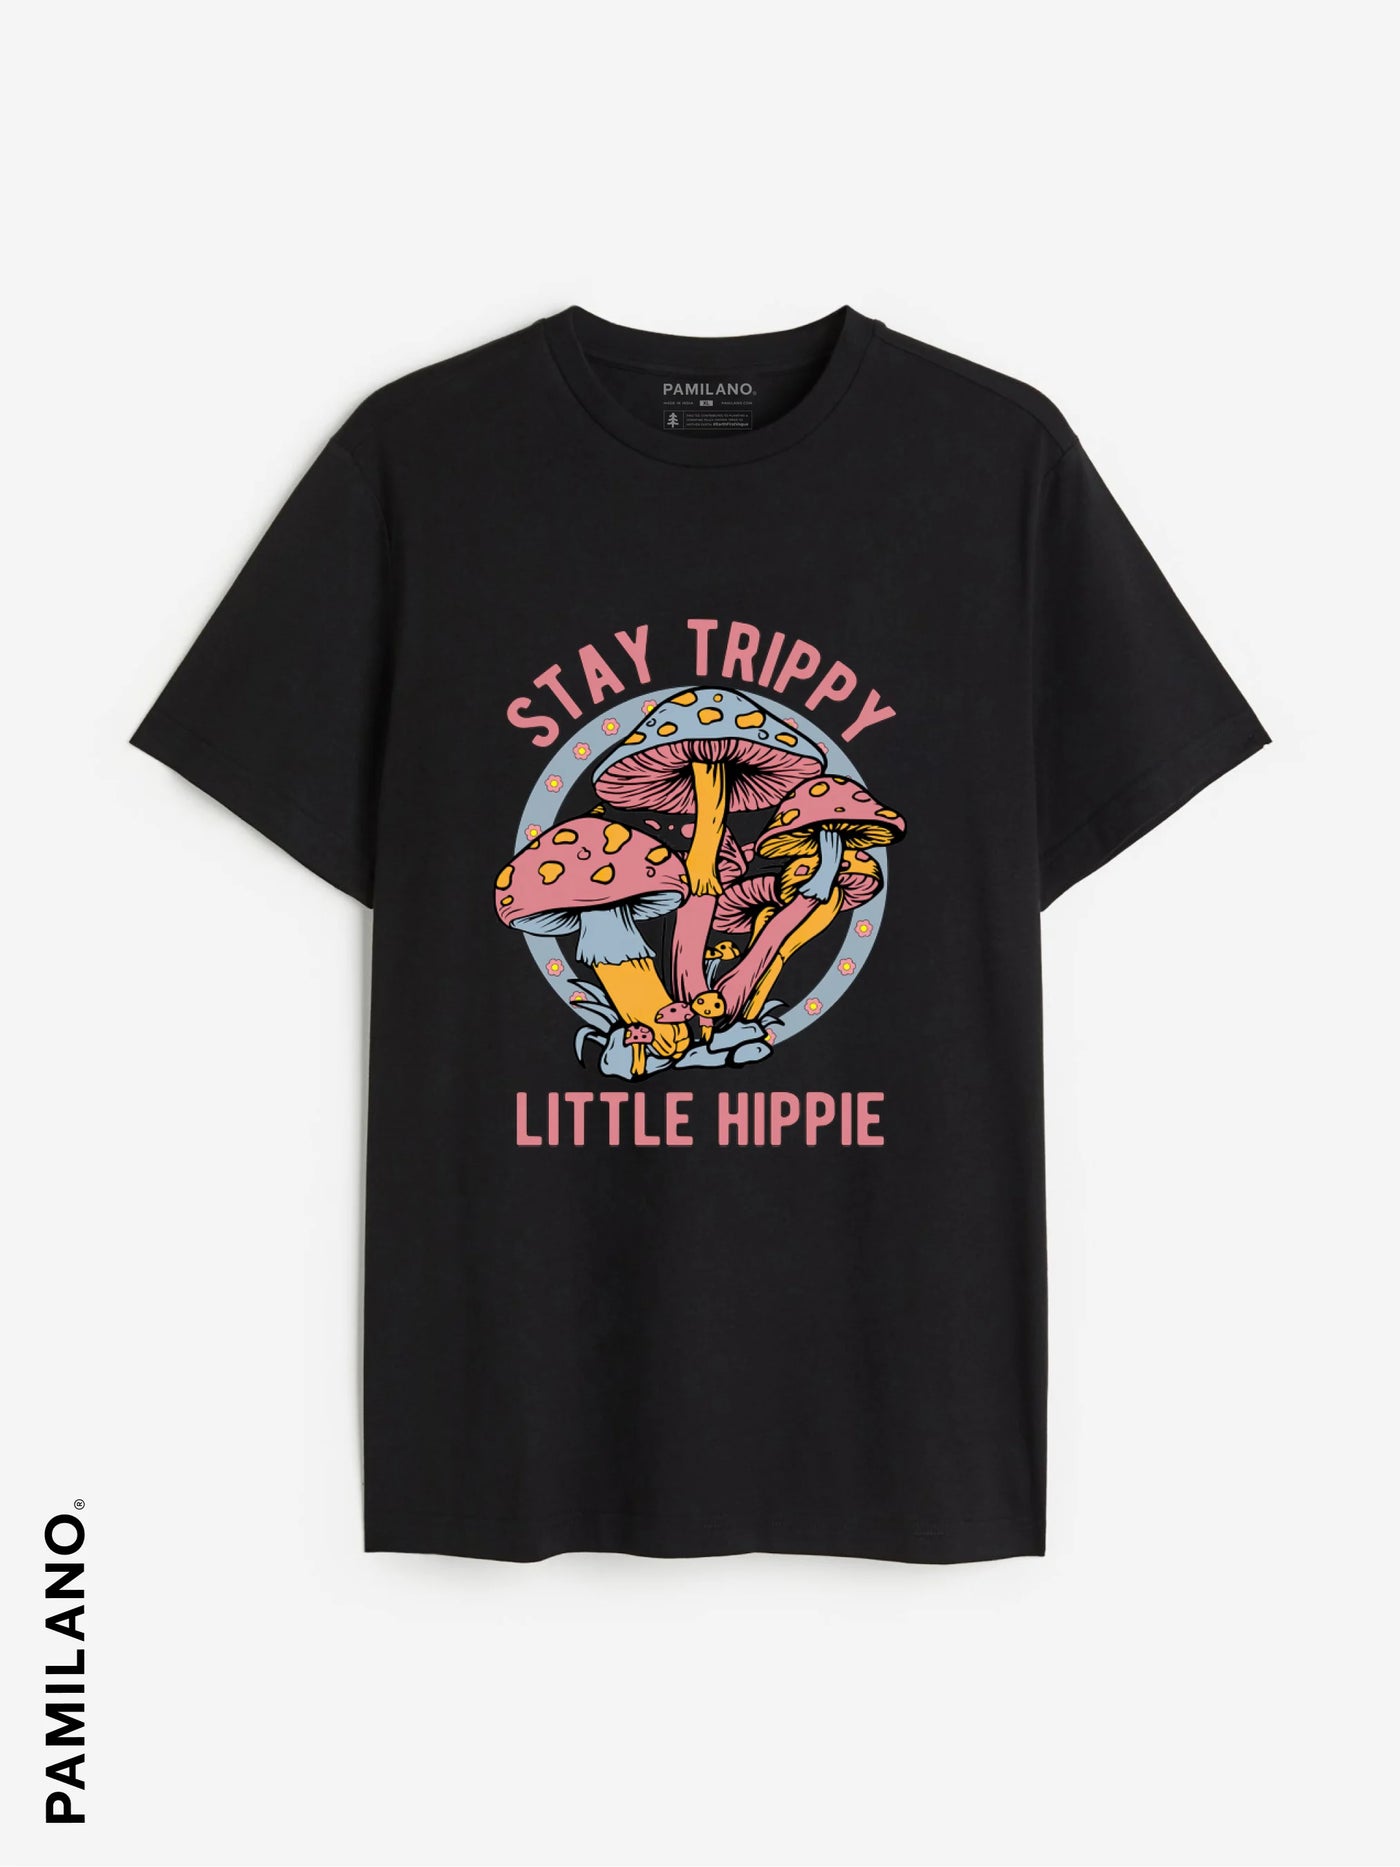 Stay Trippy t-shirt